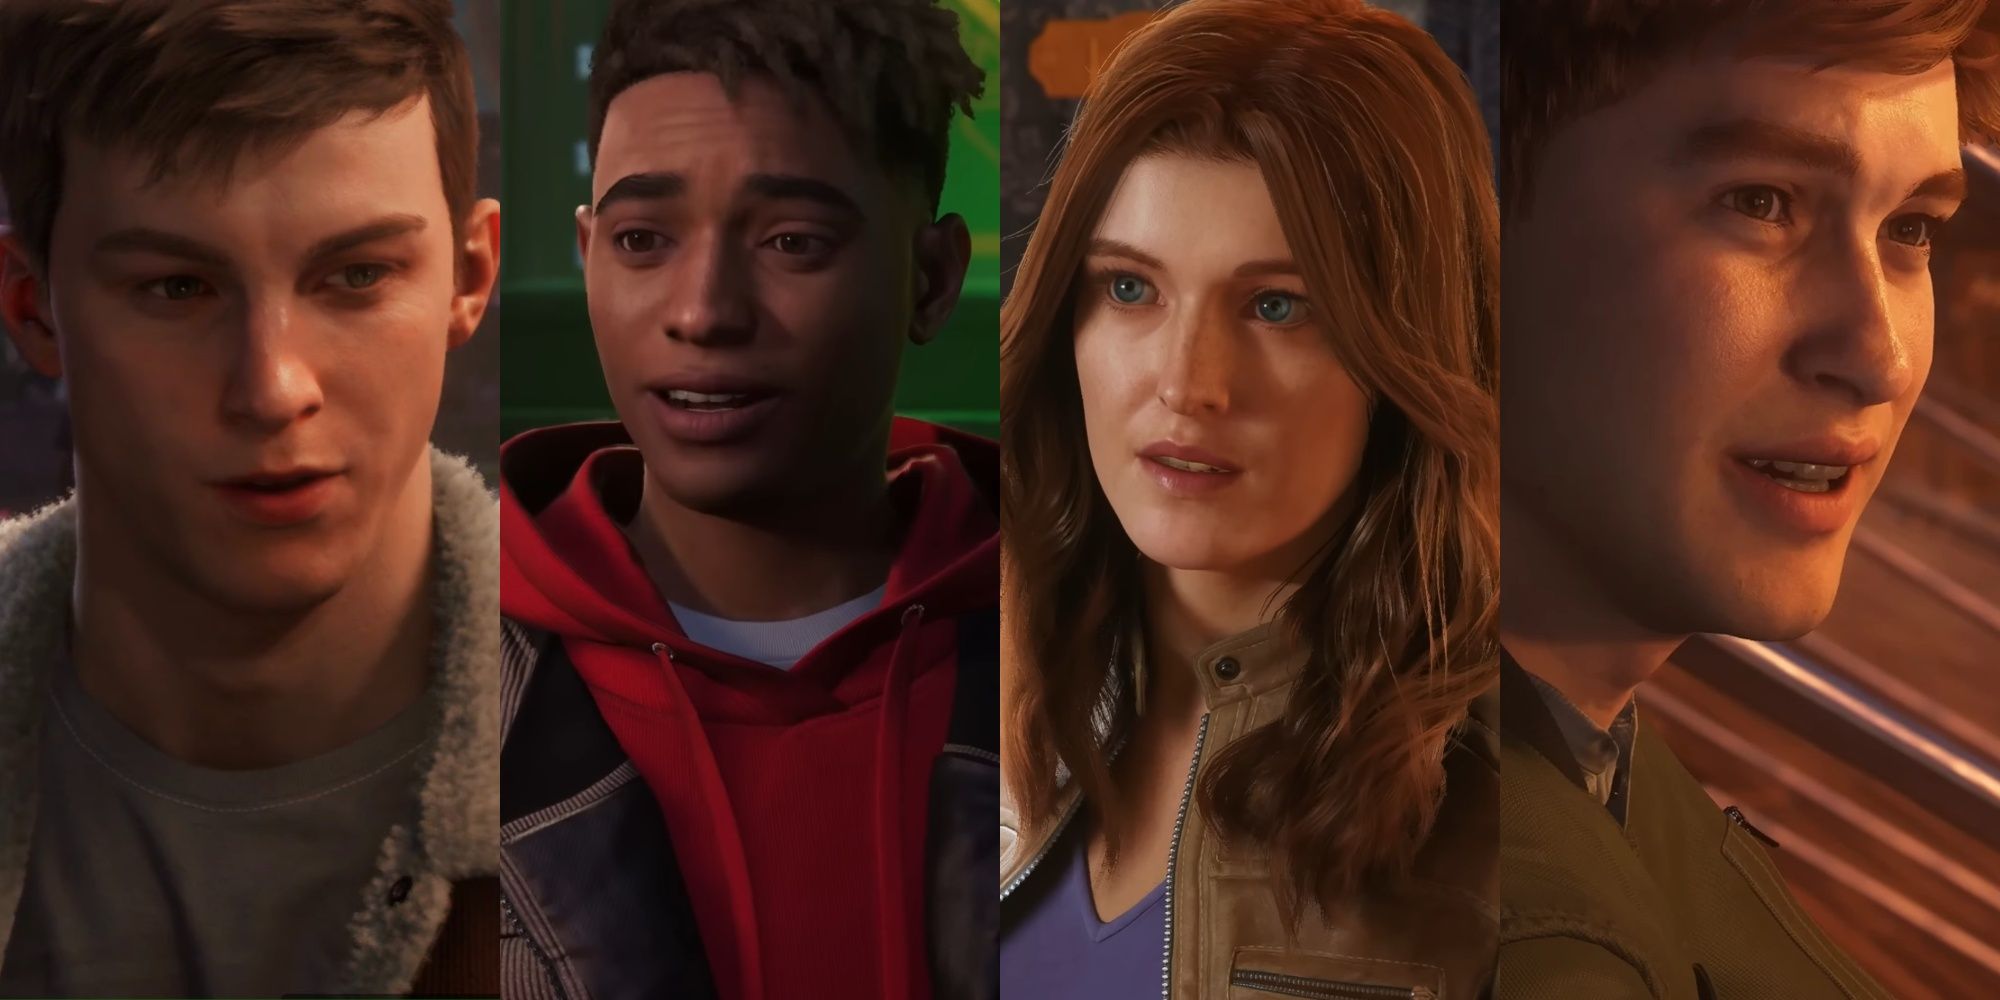 Meet the Voice Actors of Spider-Man 2's Cast